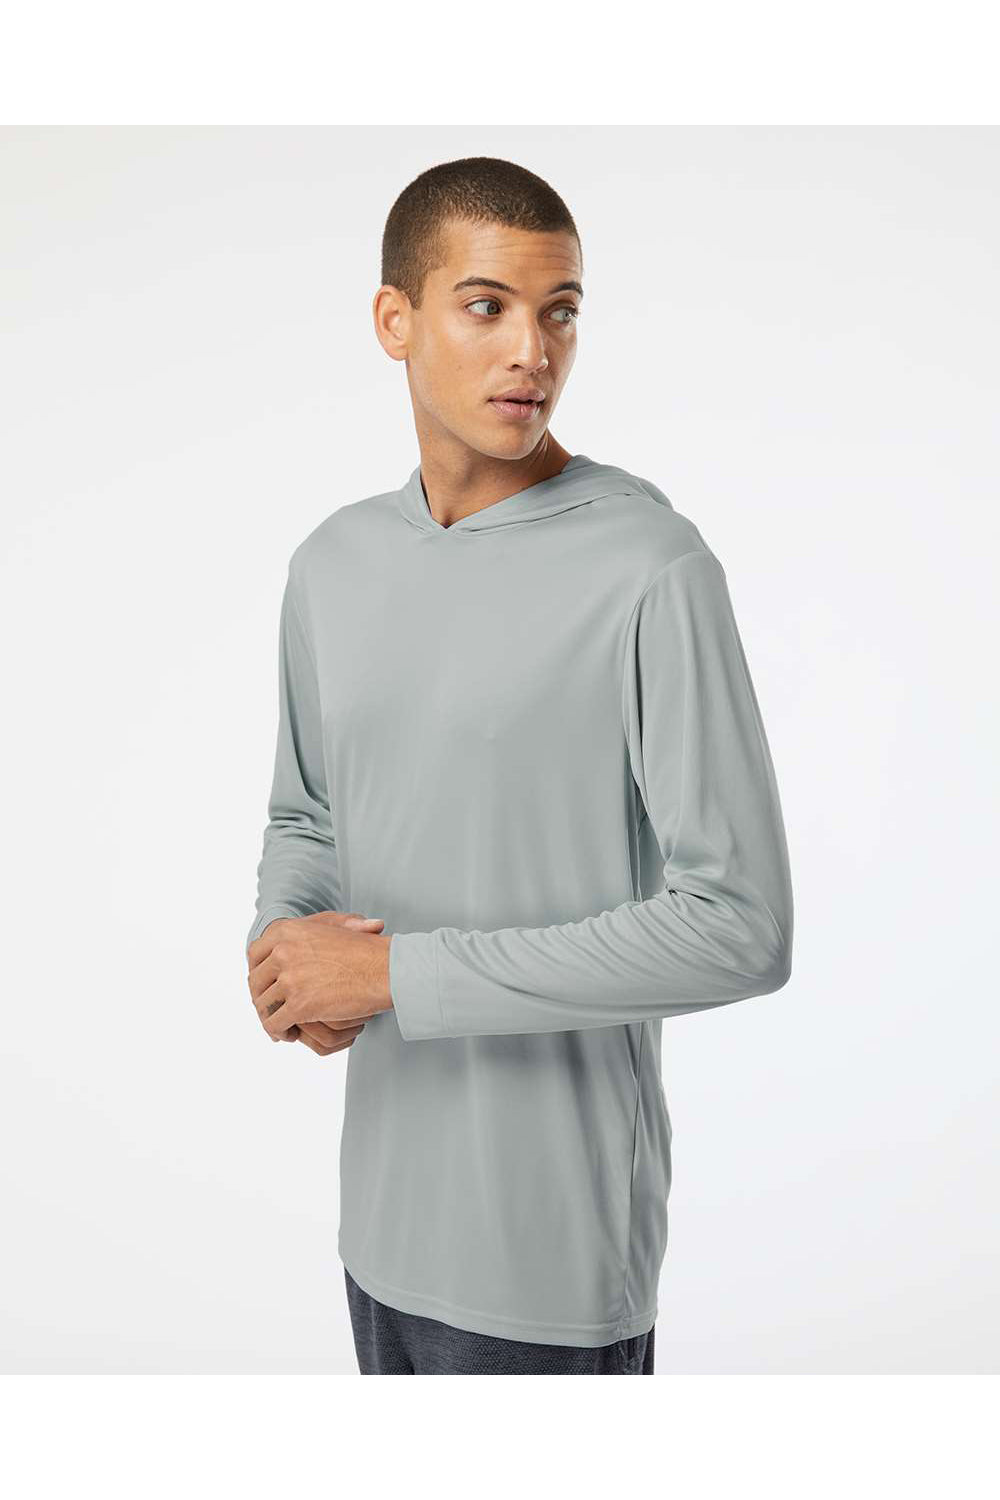 Paragon 220 Mens Bahama Performance Long Sleeve Hooded T-Shirt Hoodie Medium Grey Model Side